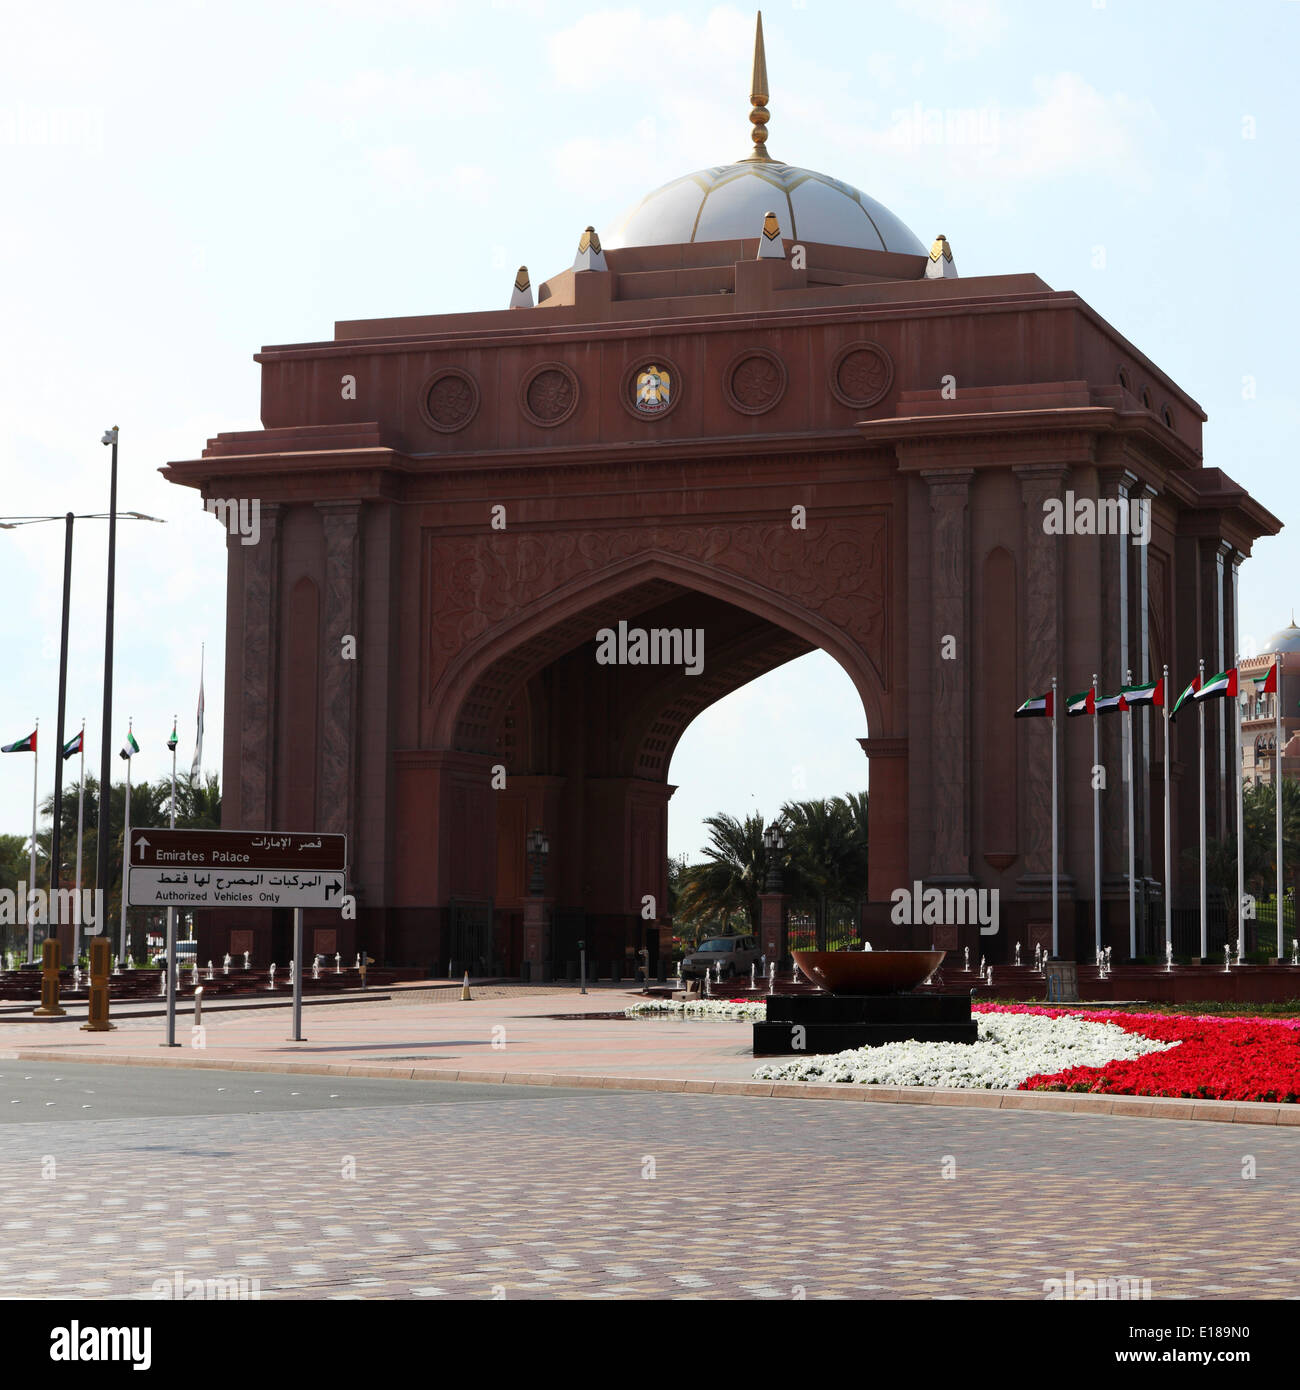 Arco d'ingresso alla Emirates Palace di Abu Dhabi. Foto Stock